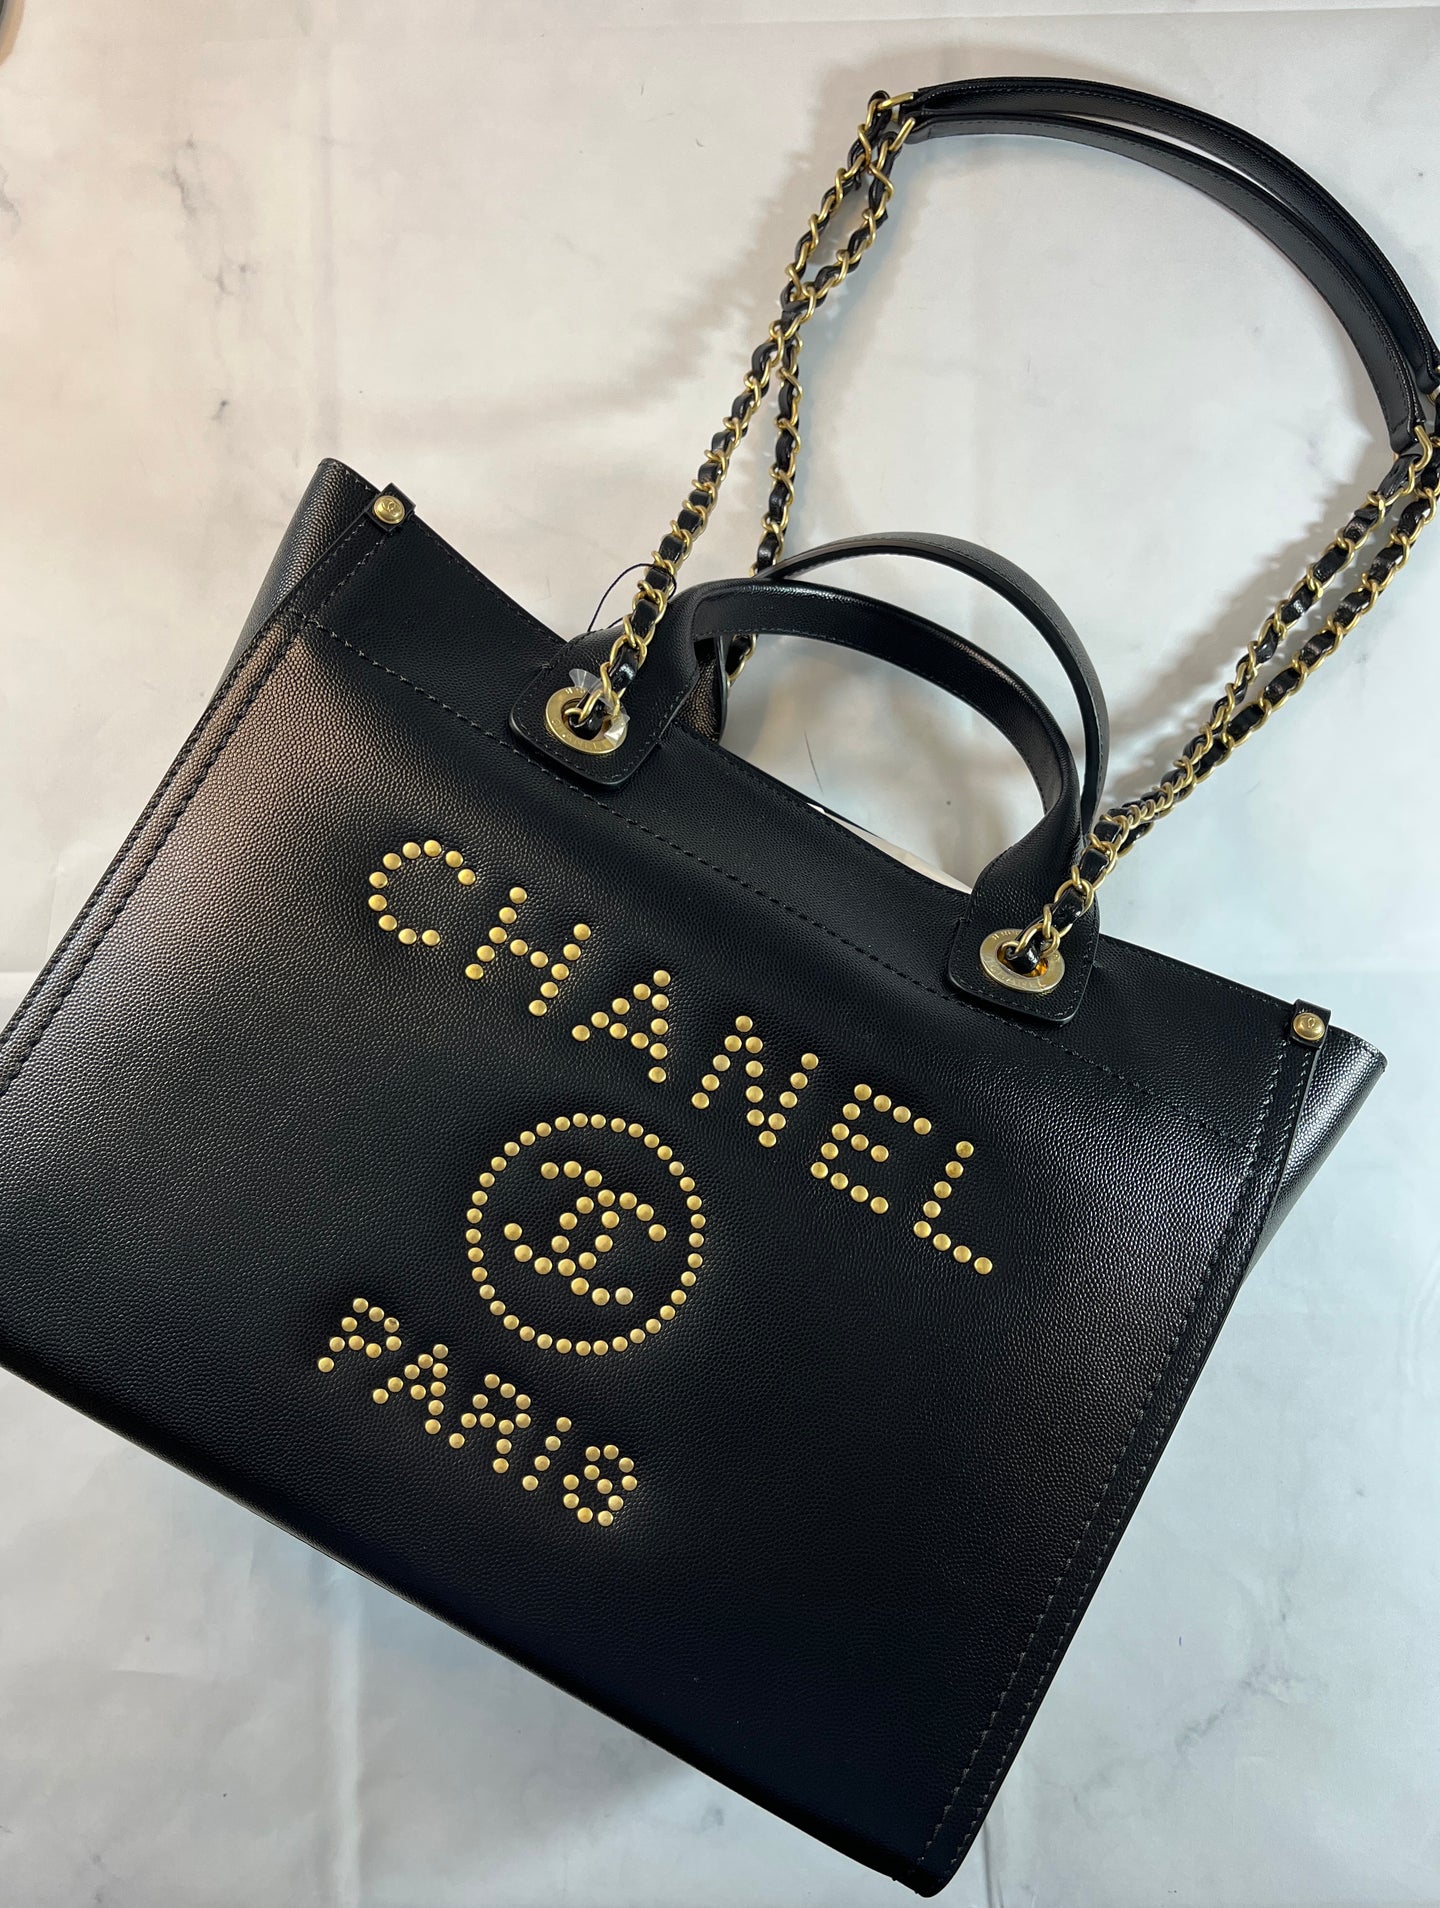 Chanel Black Leather Deauville Tote Handbag